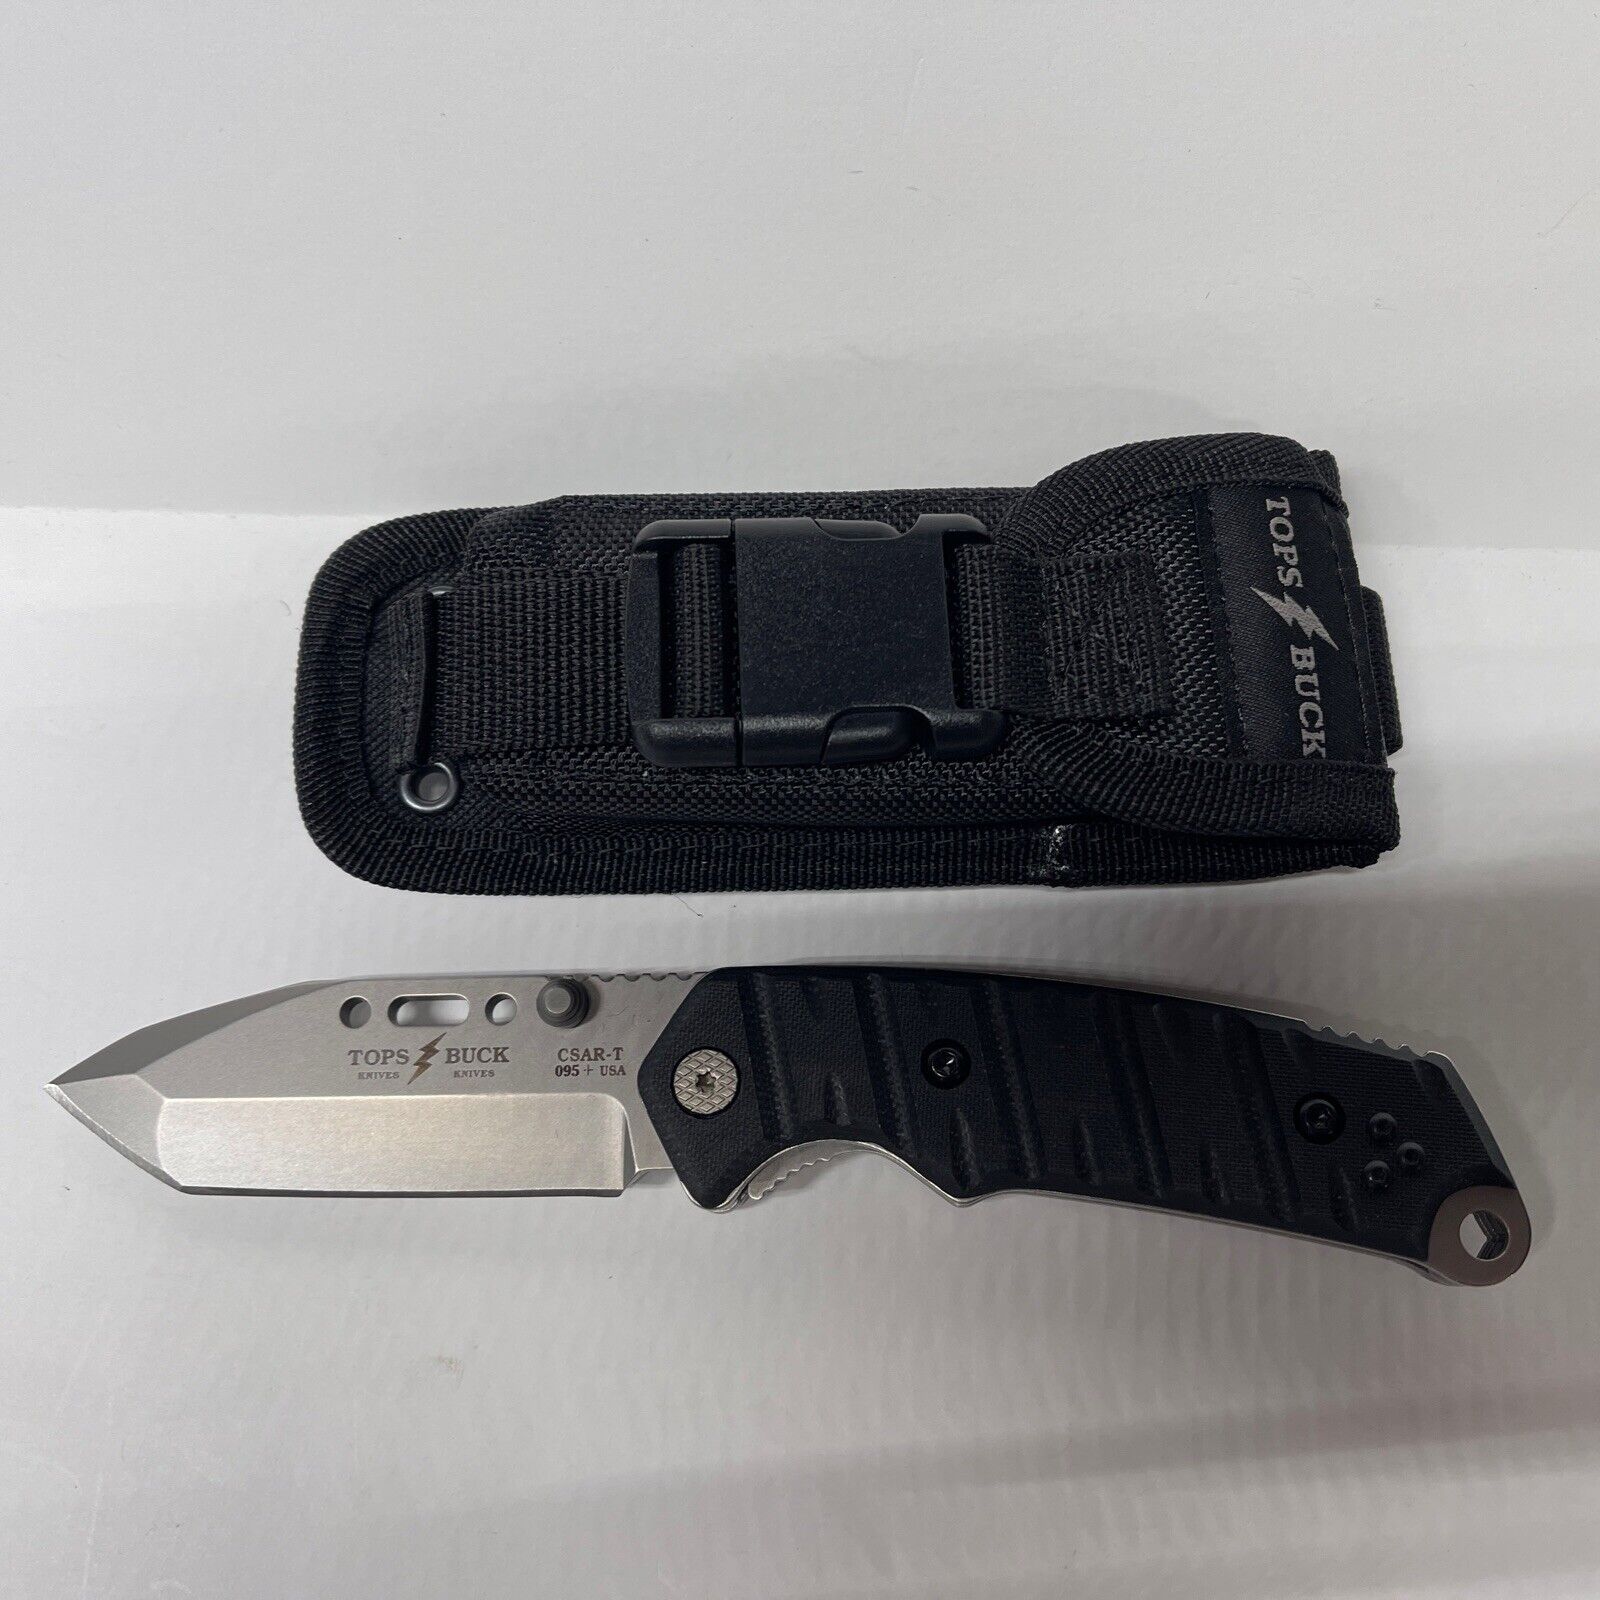 Buck/TOPS DISC. CSAR-T Tactical Knife BOS 154 CM, Black G10 Scales, Sheath New.